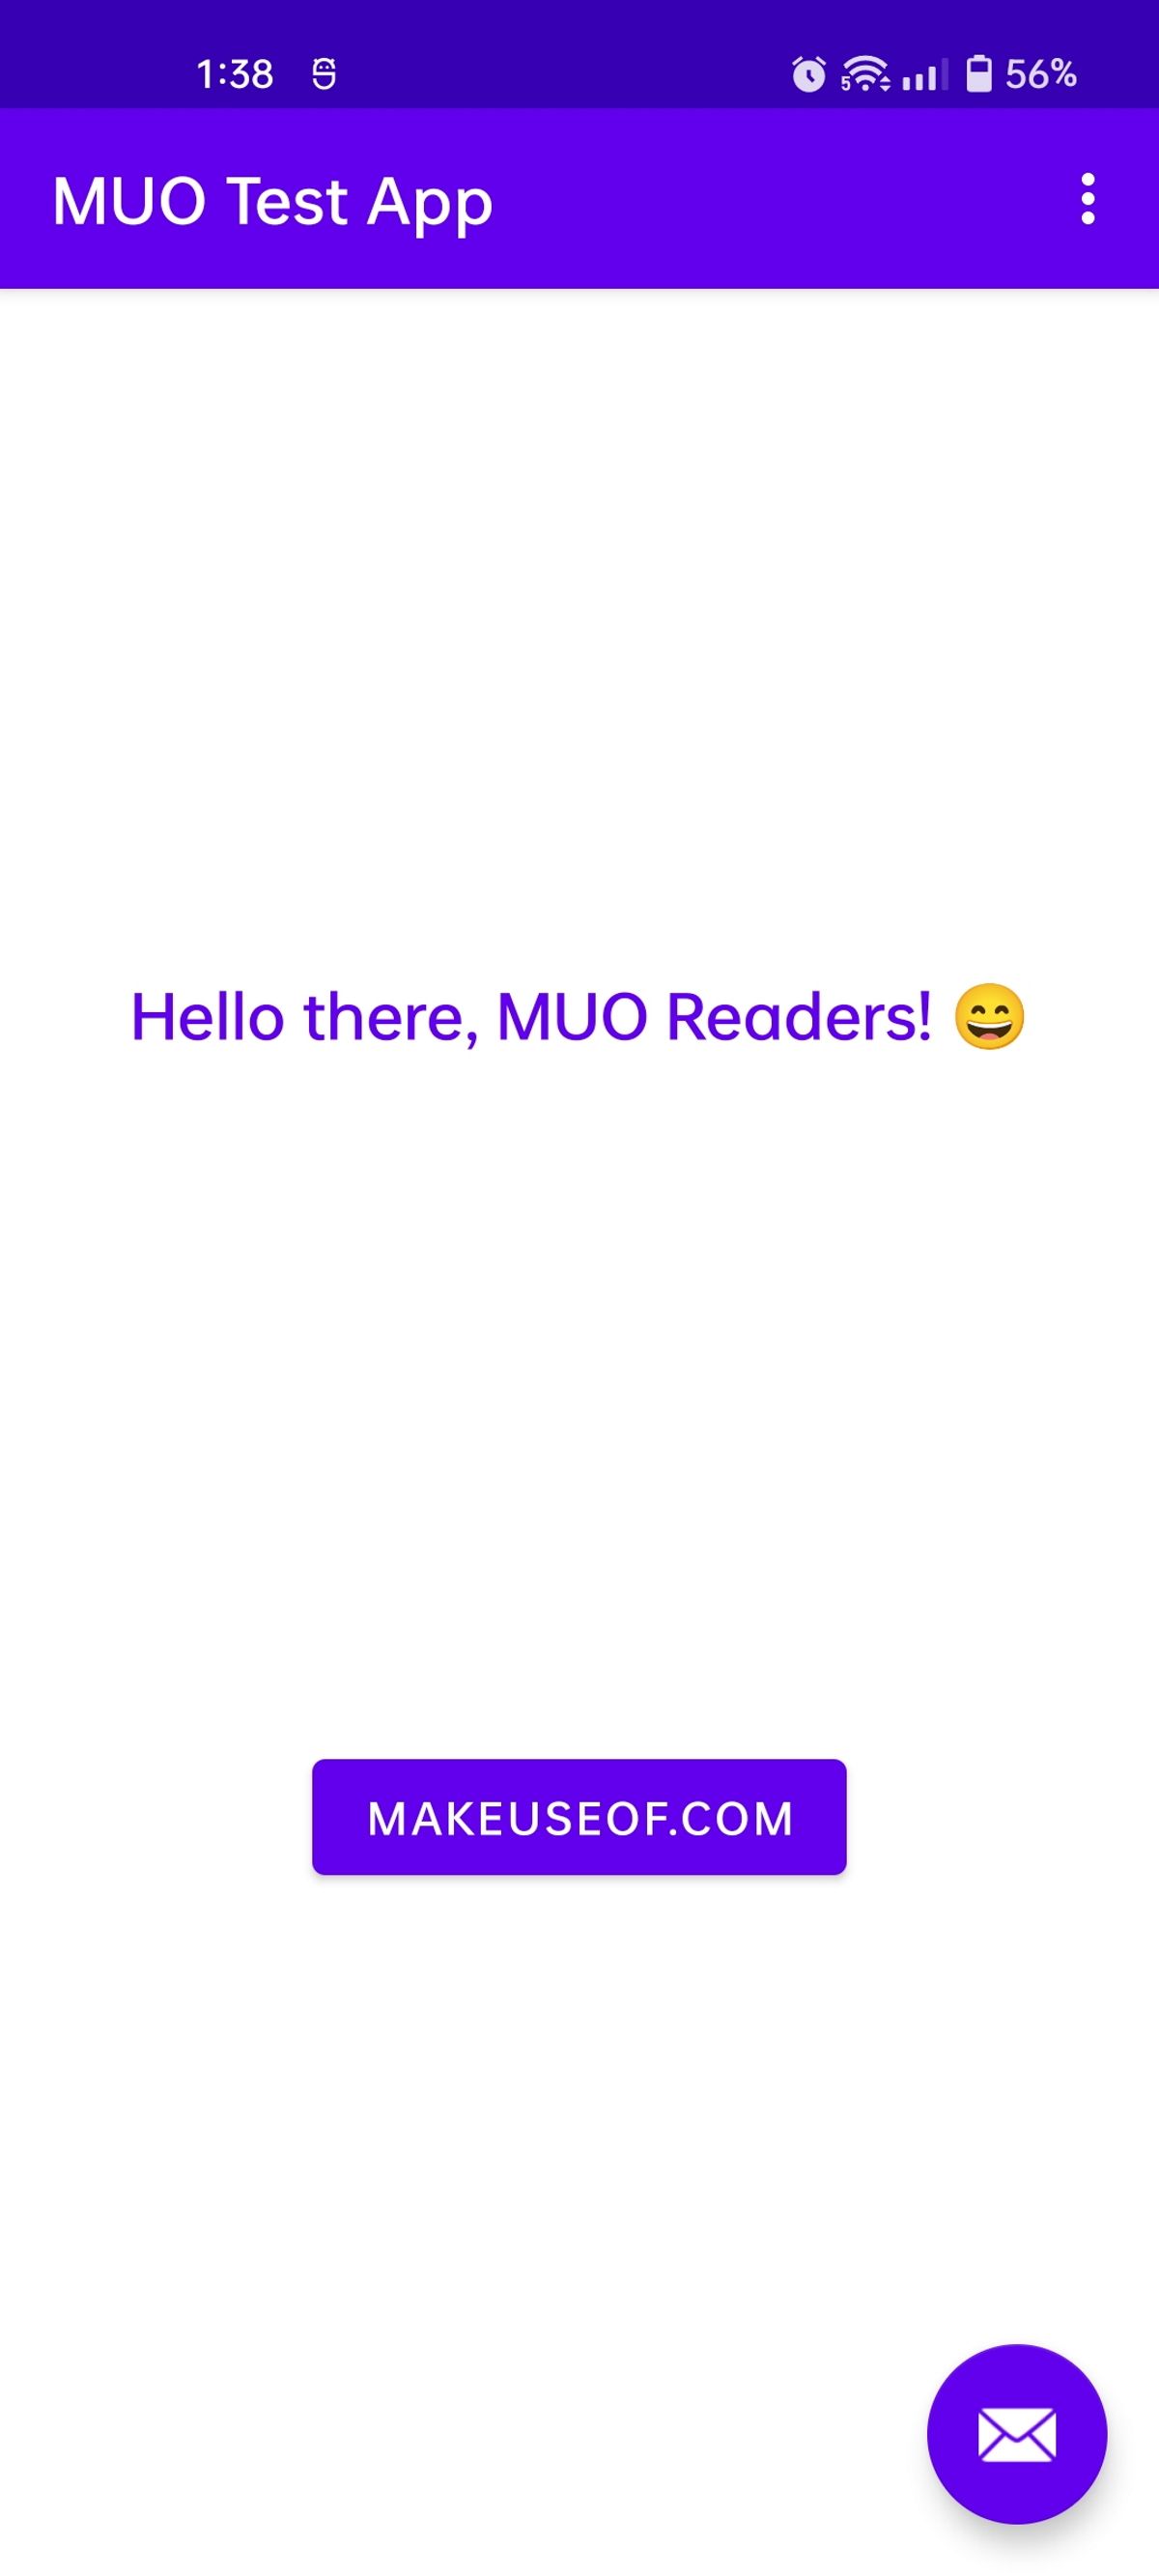 A MUO test app